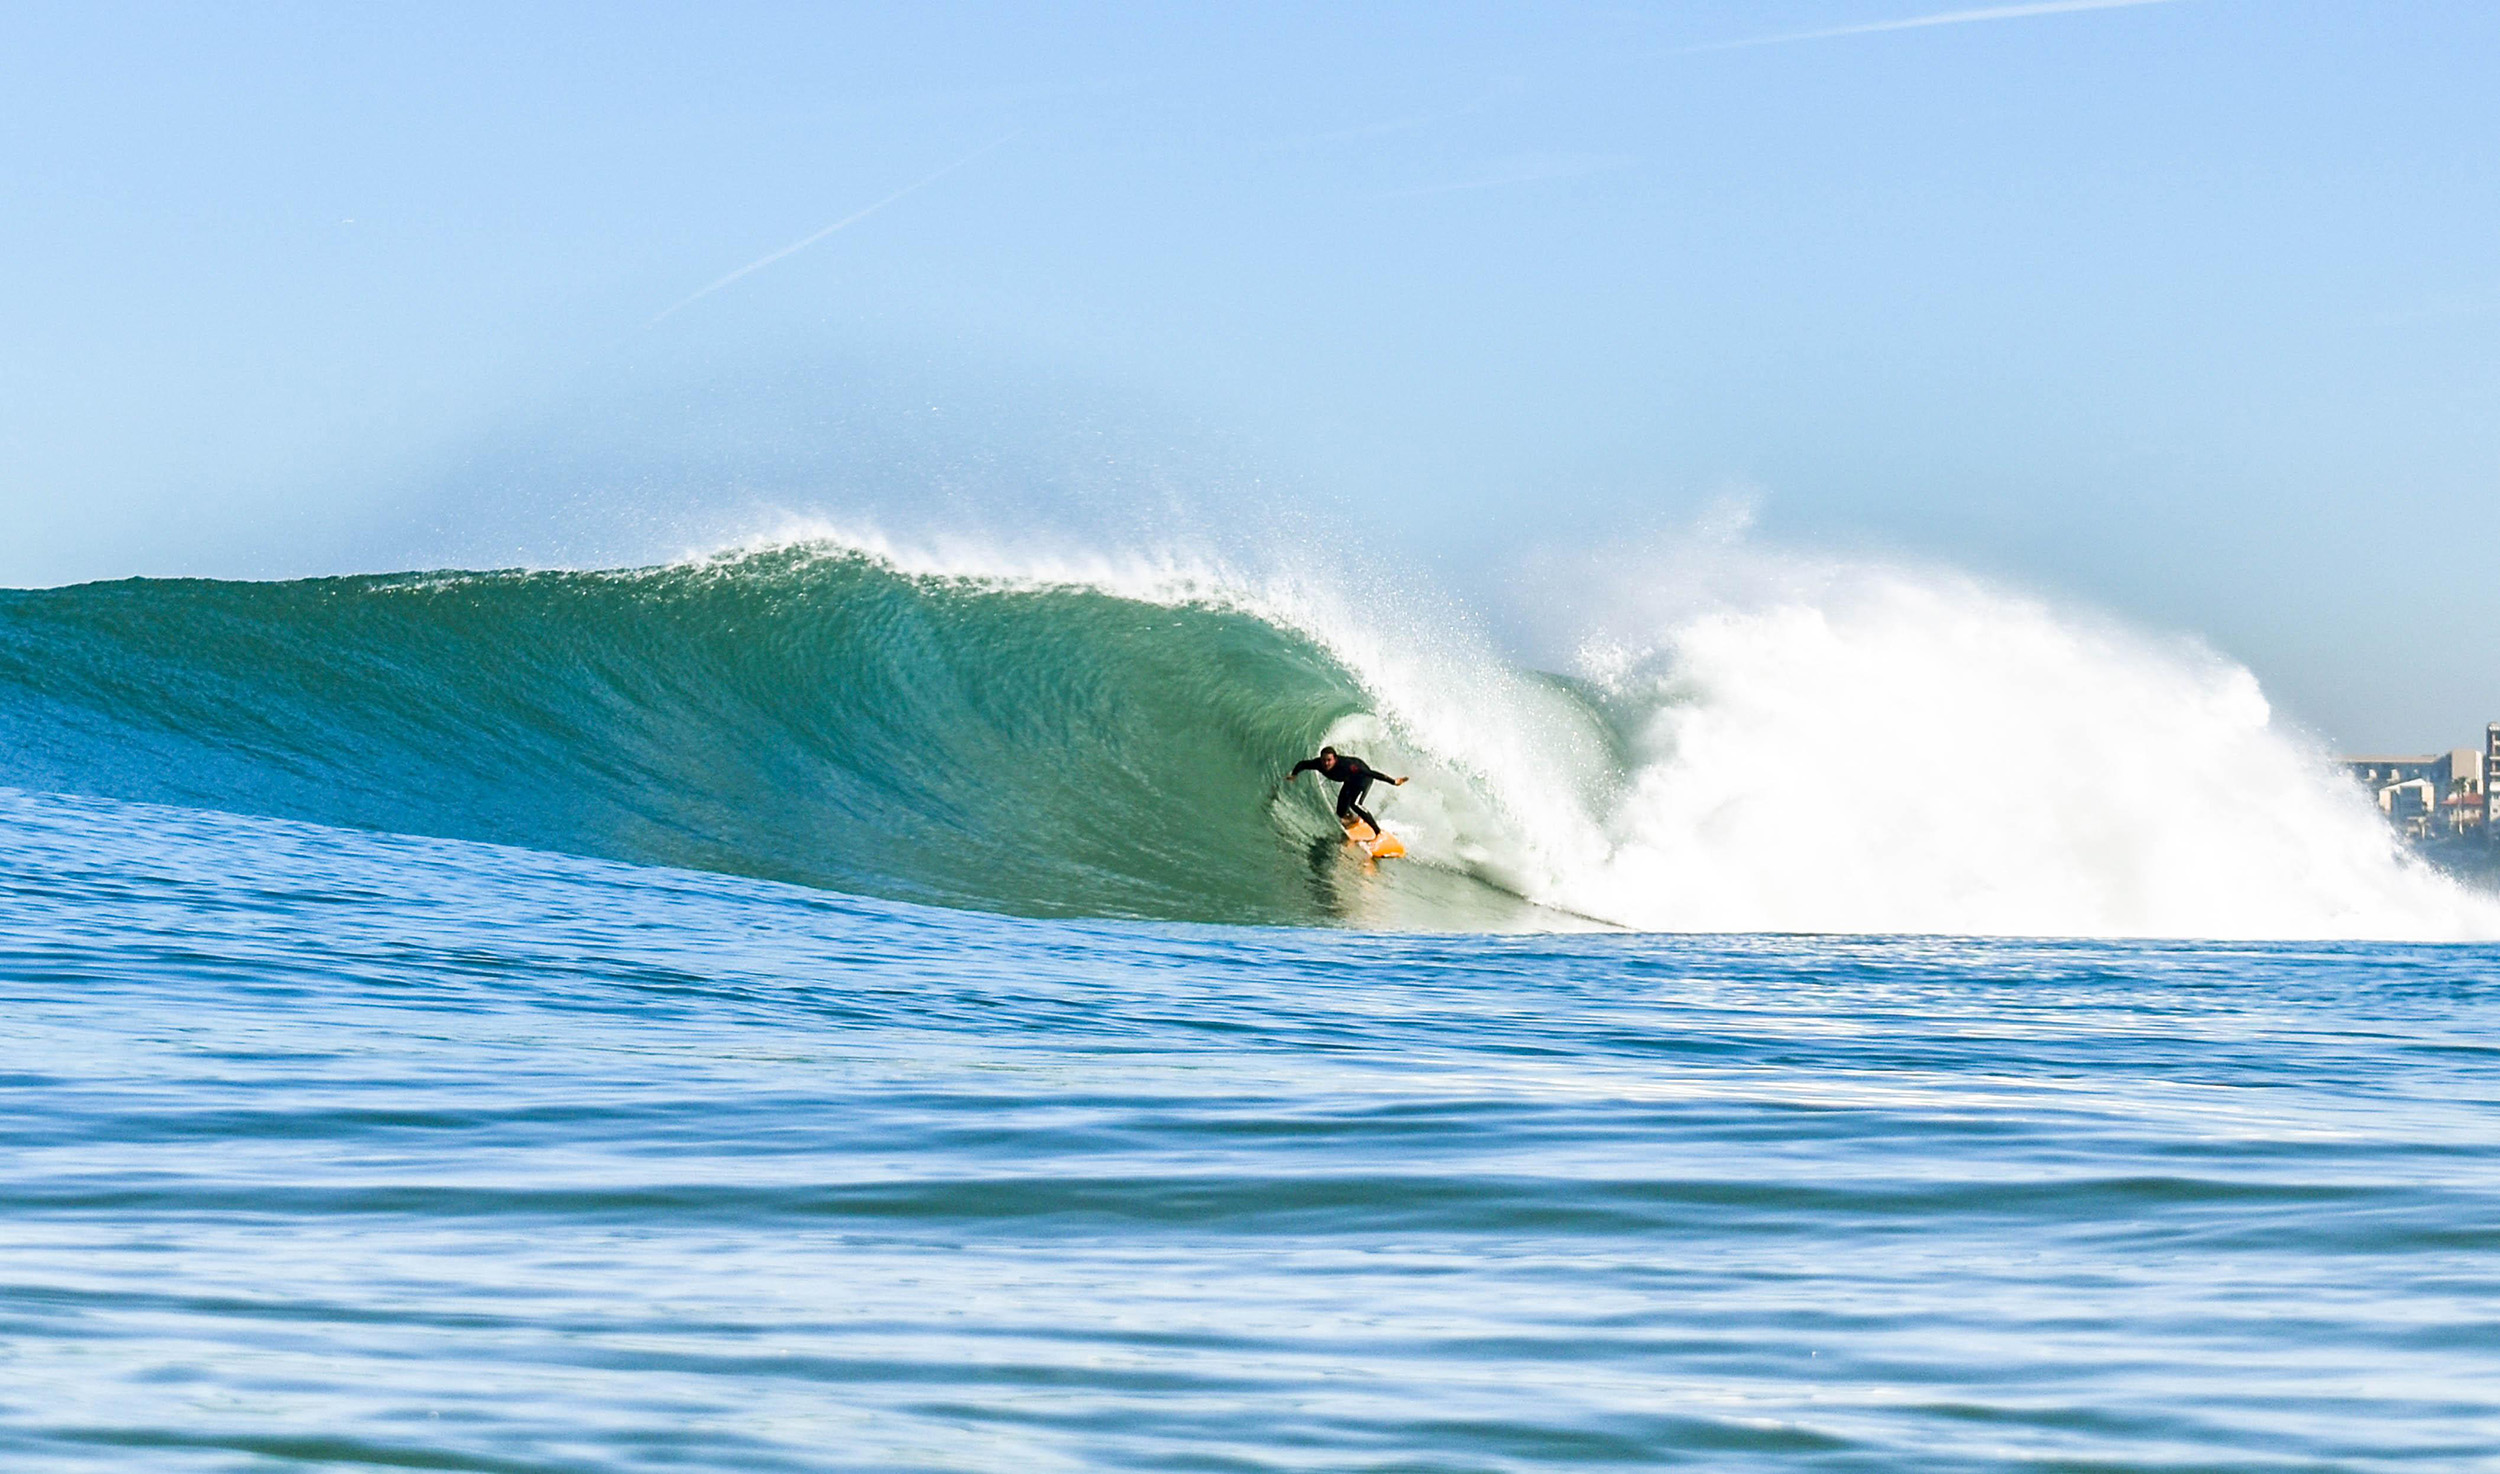 Torrance alex beach surfing spot check carlson gray michael surf surfline tucks cylinder legend bay local south into